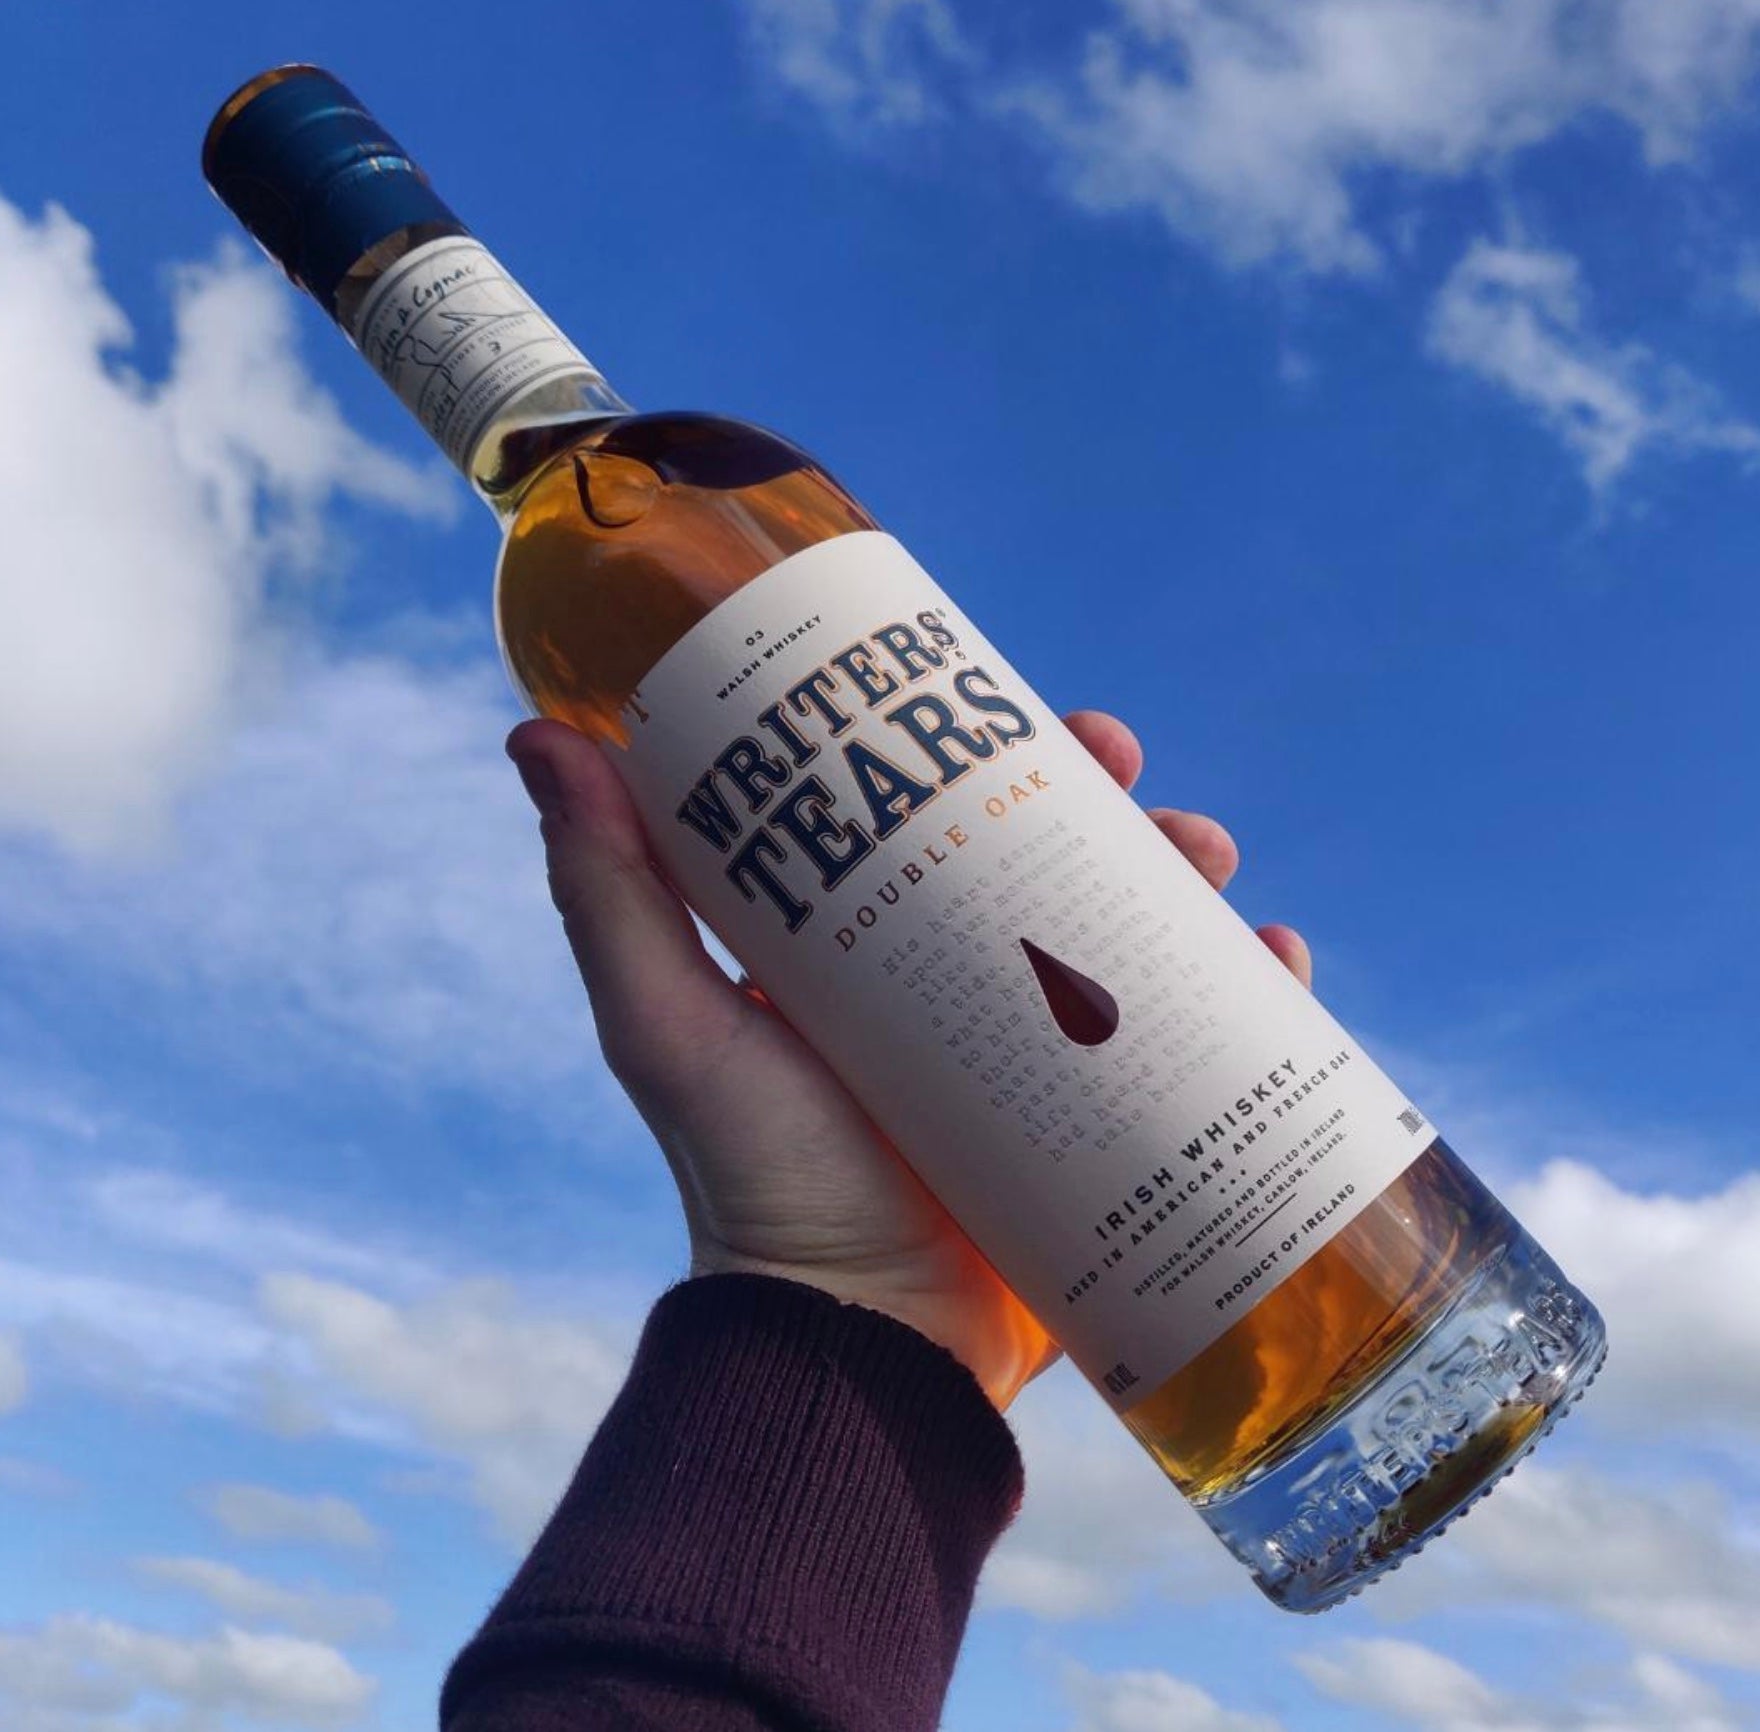 Writer's Tears Double Oak Irish Whiskey